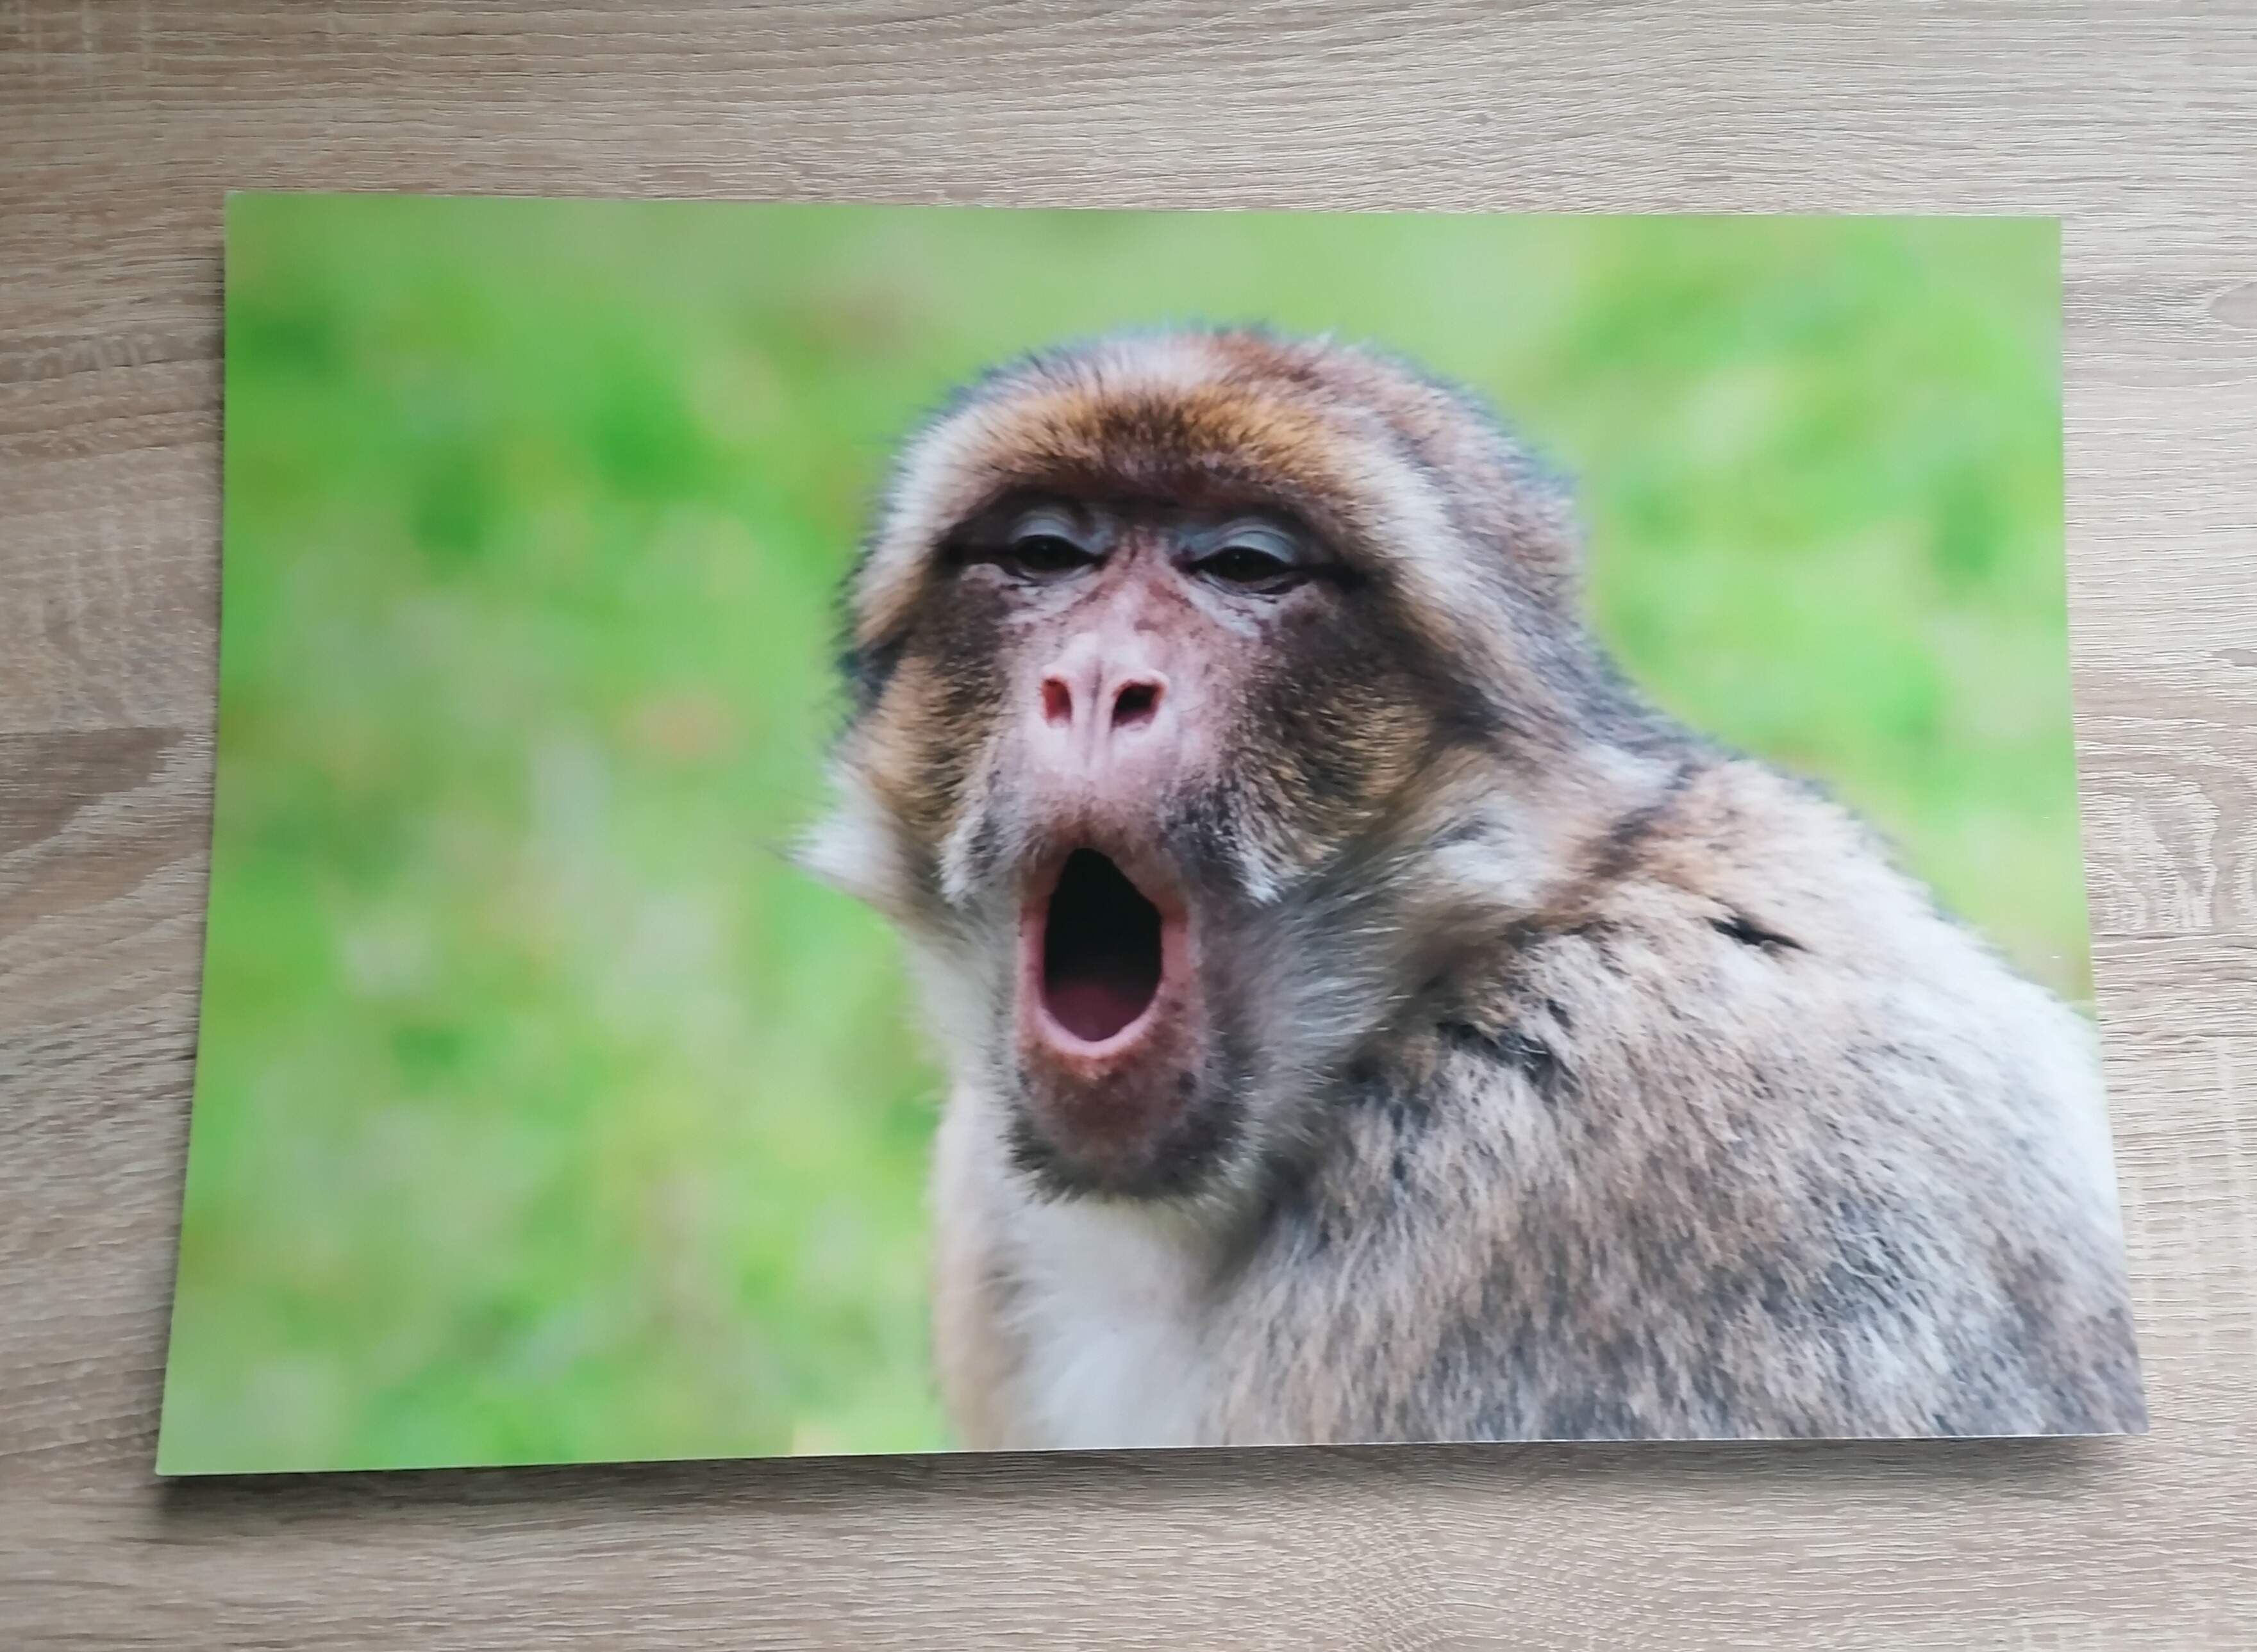 Barbary Macaque photo